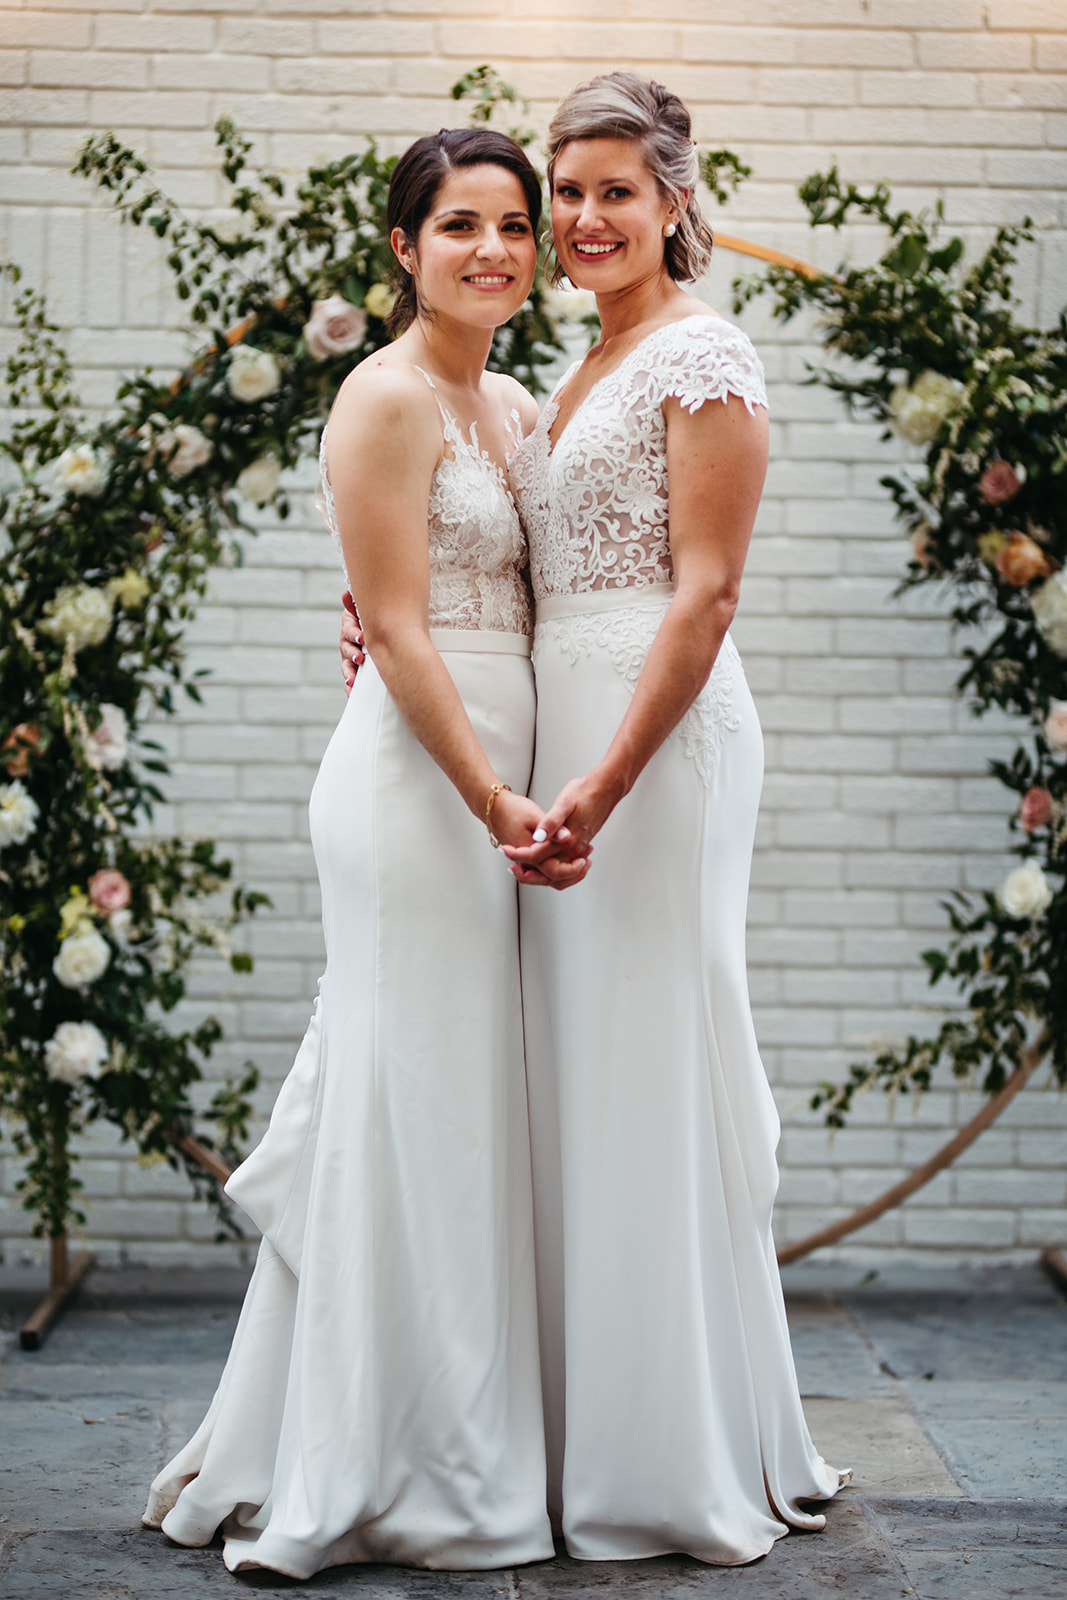 Queer affirming wedding photographer